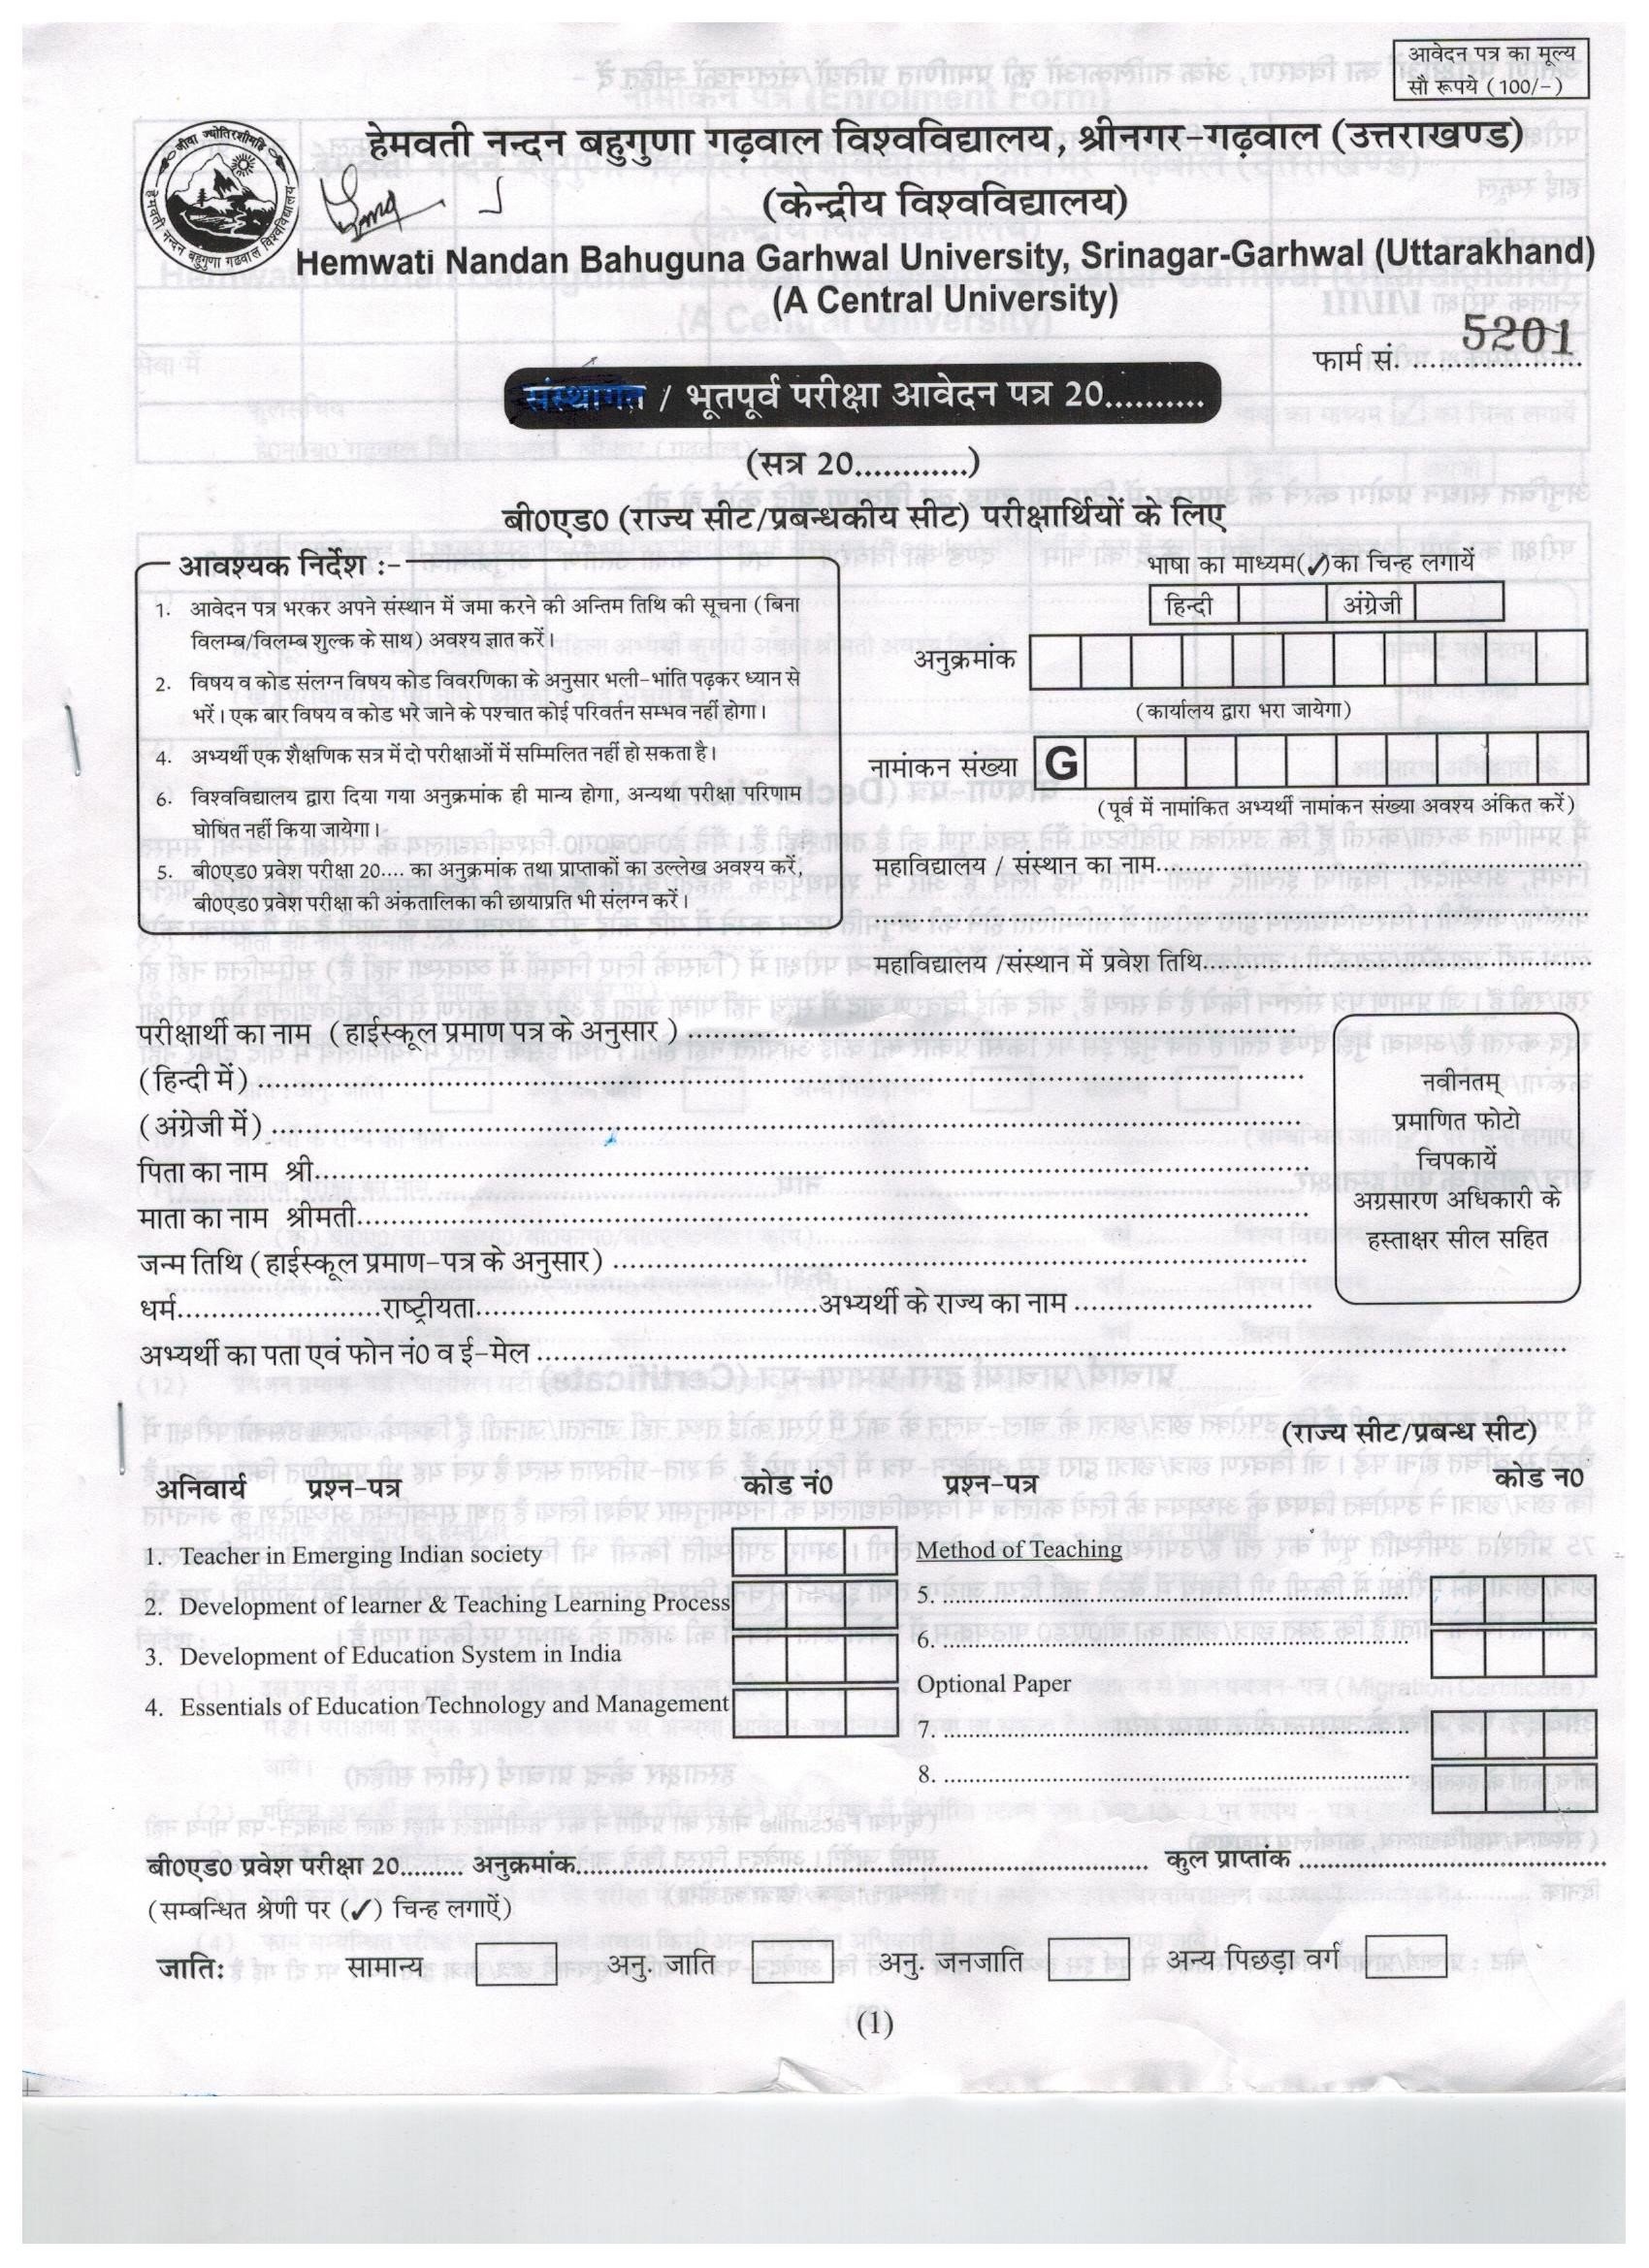 HNBGU examination form